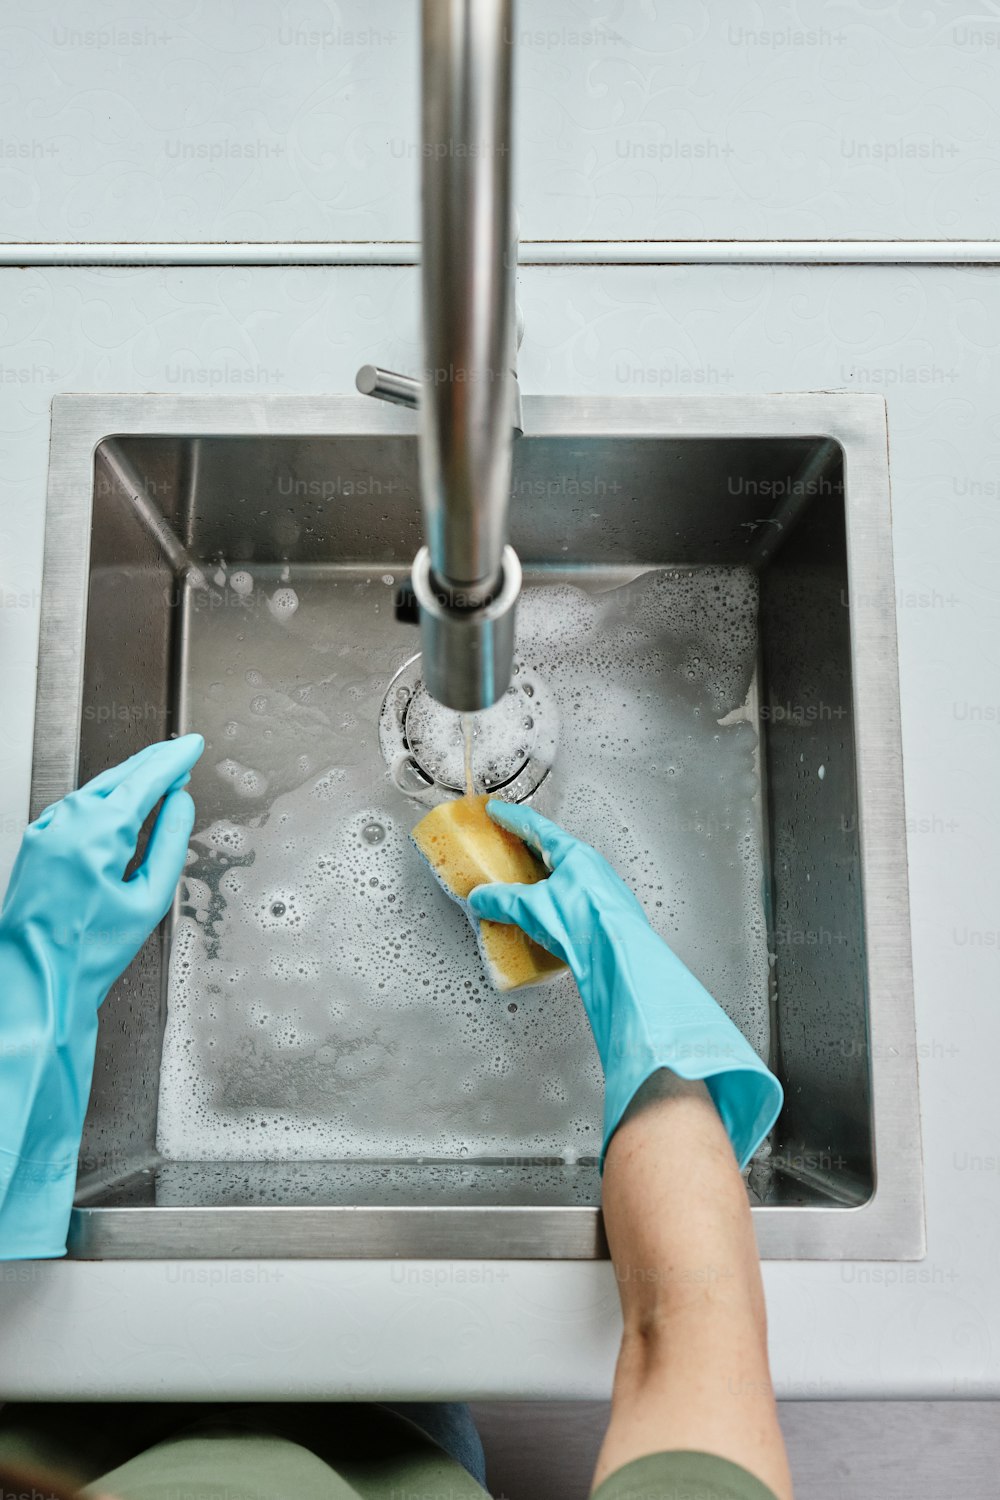 Una persona con guantes azules limpiando un fregadero